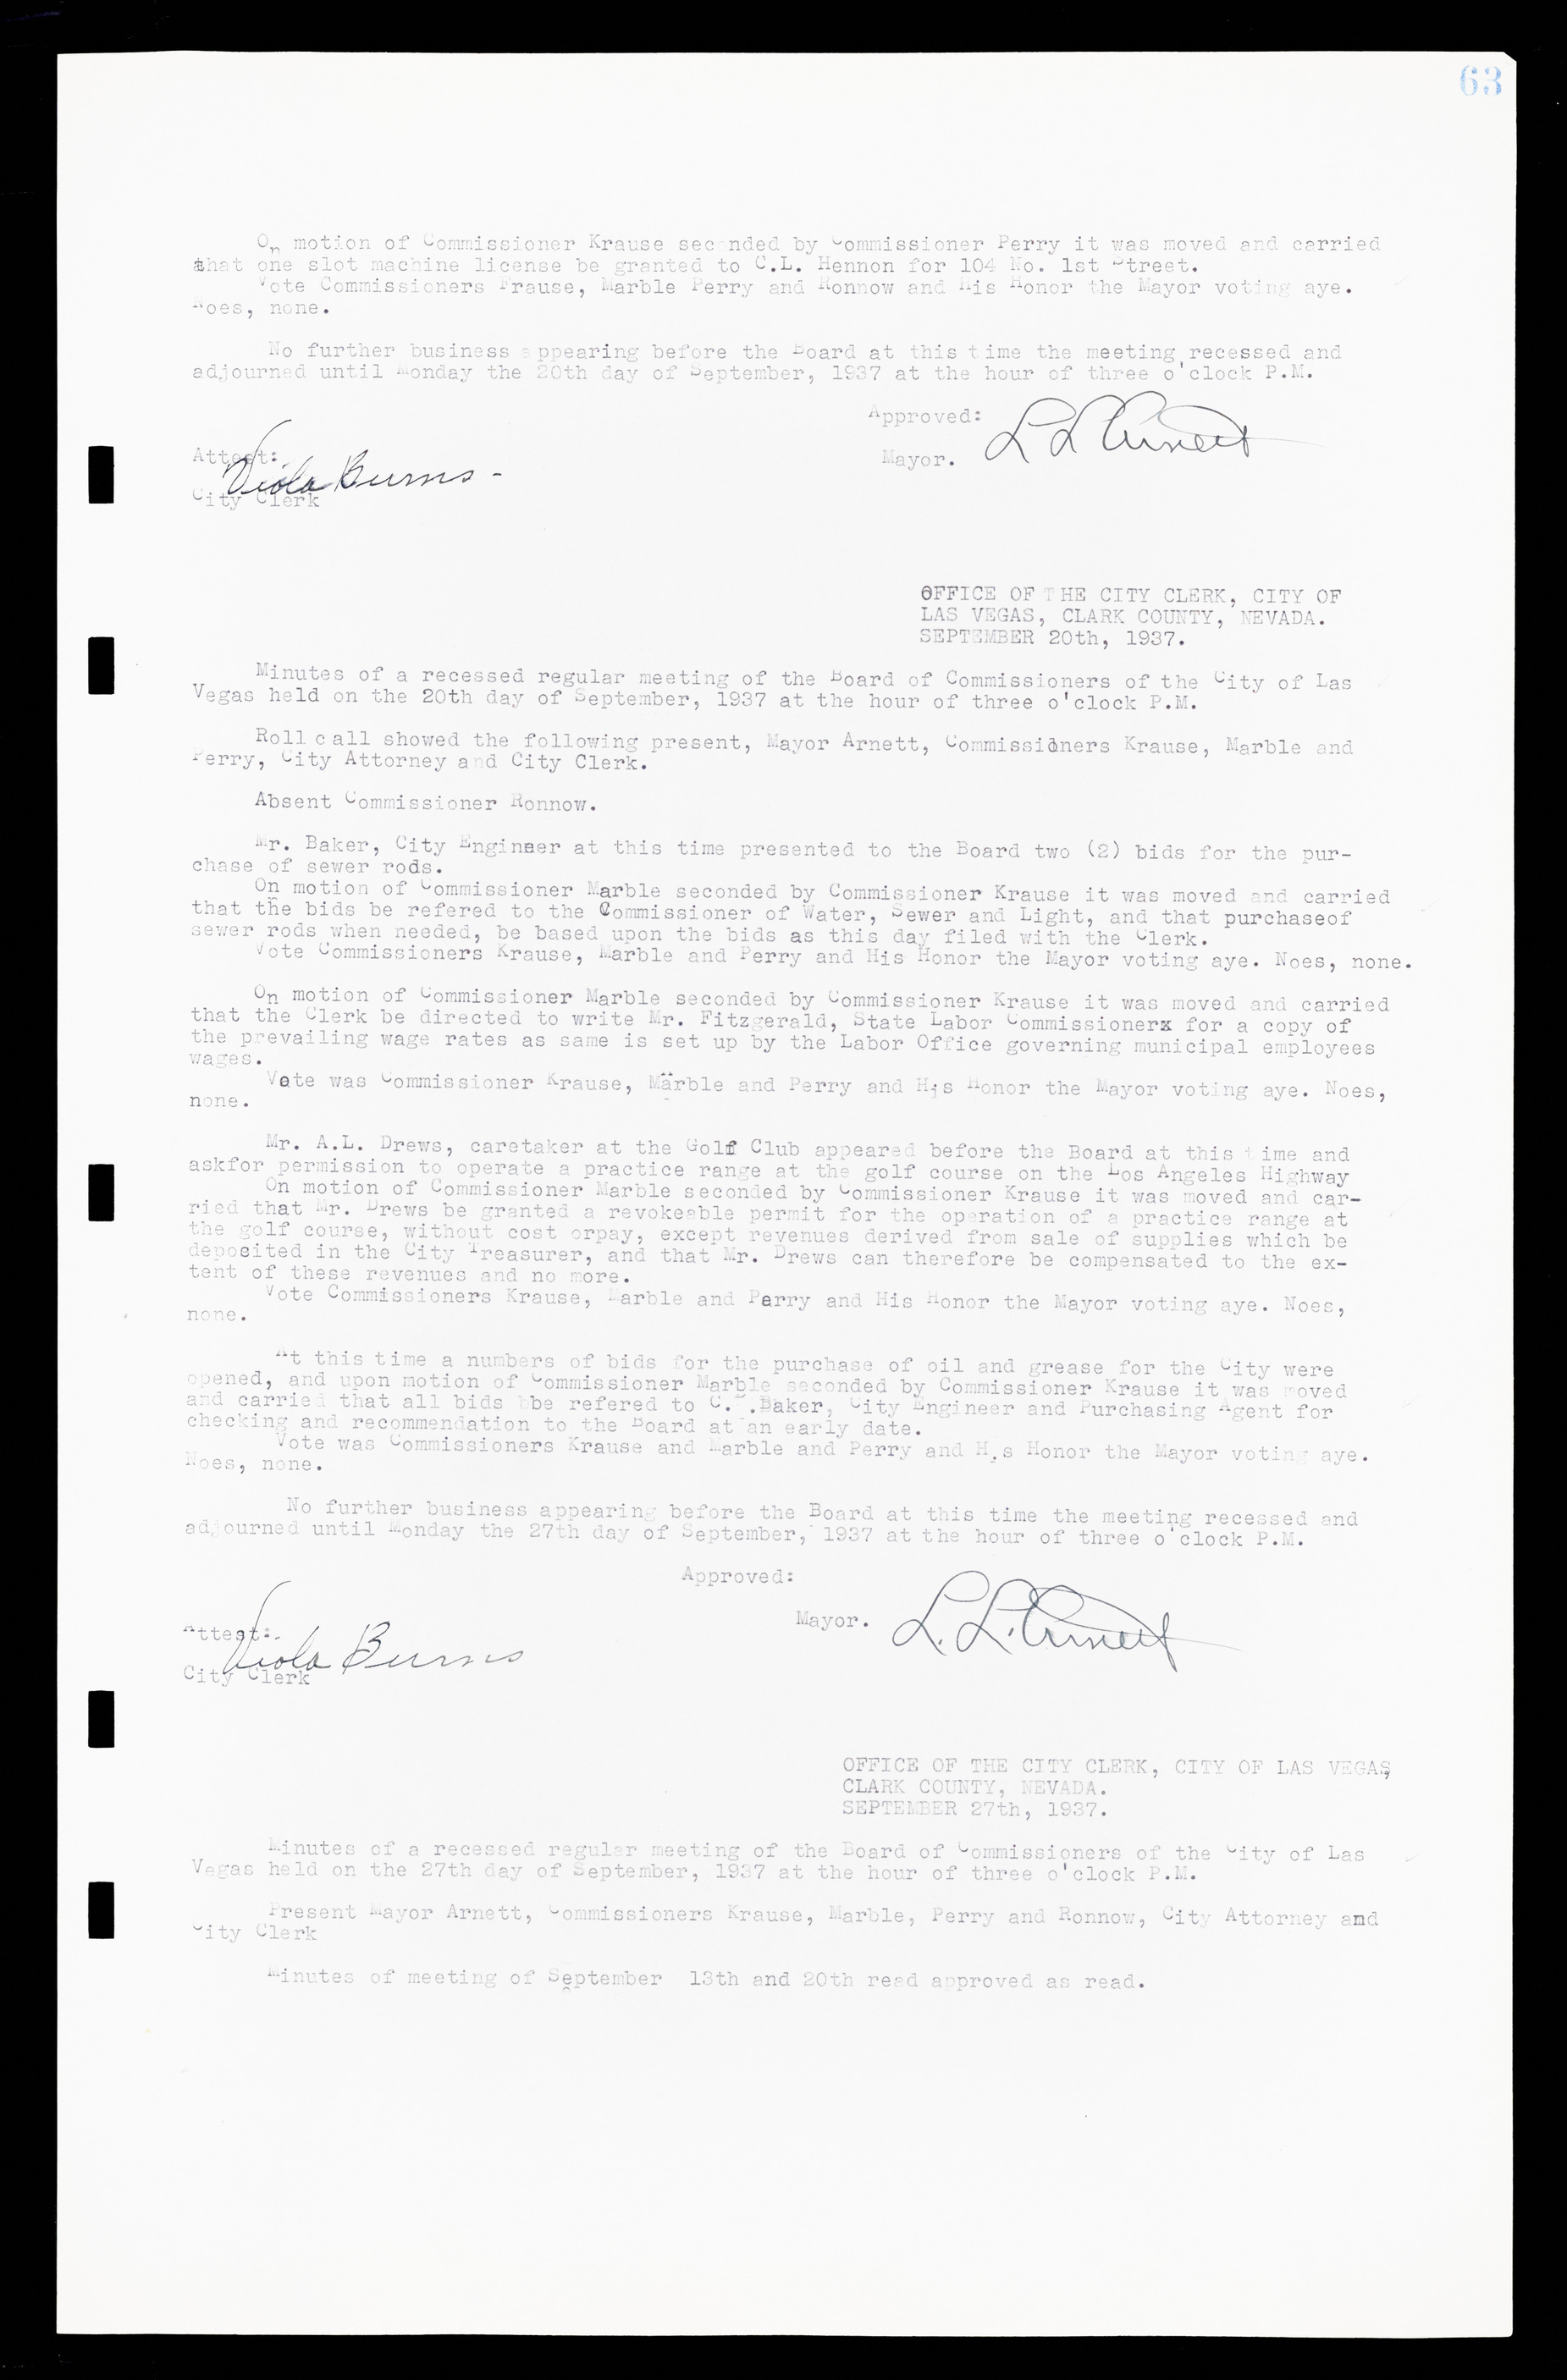 Las Vegas City Commission Minutes, February 17, 1937 to August 4, 1942, lvc000004-72